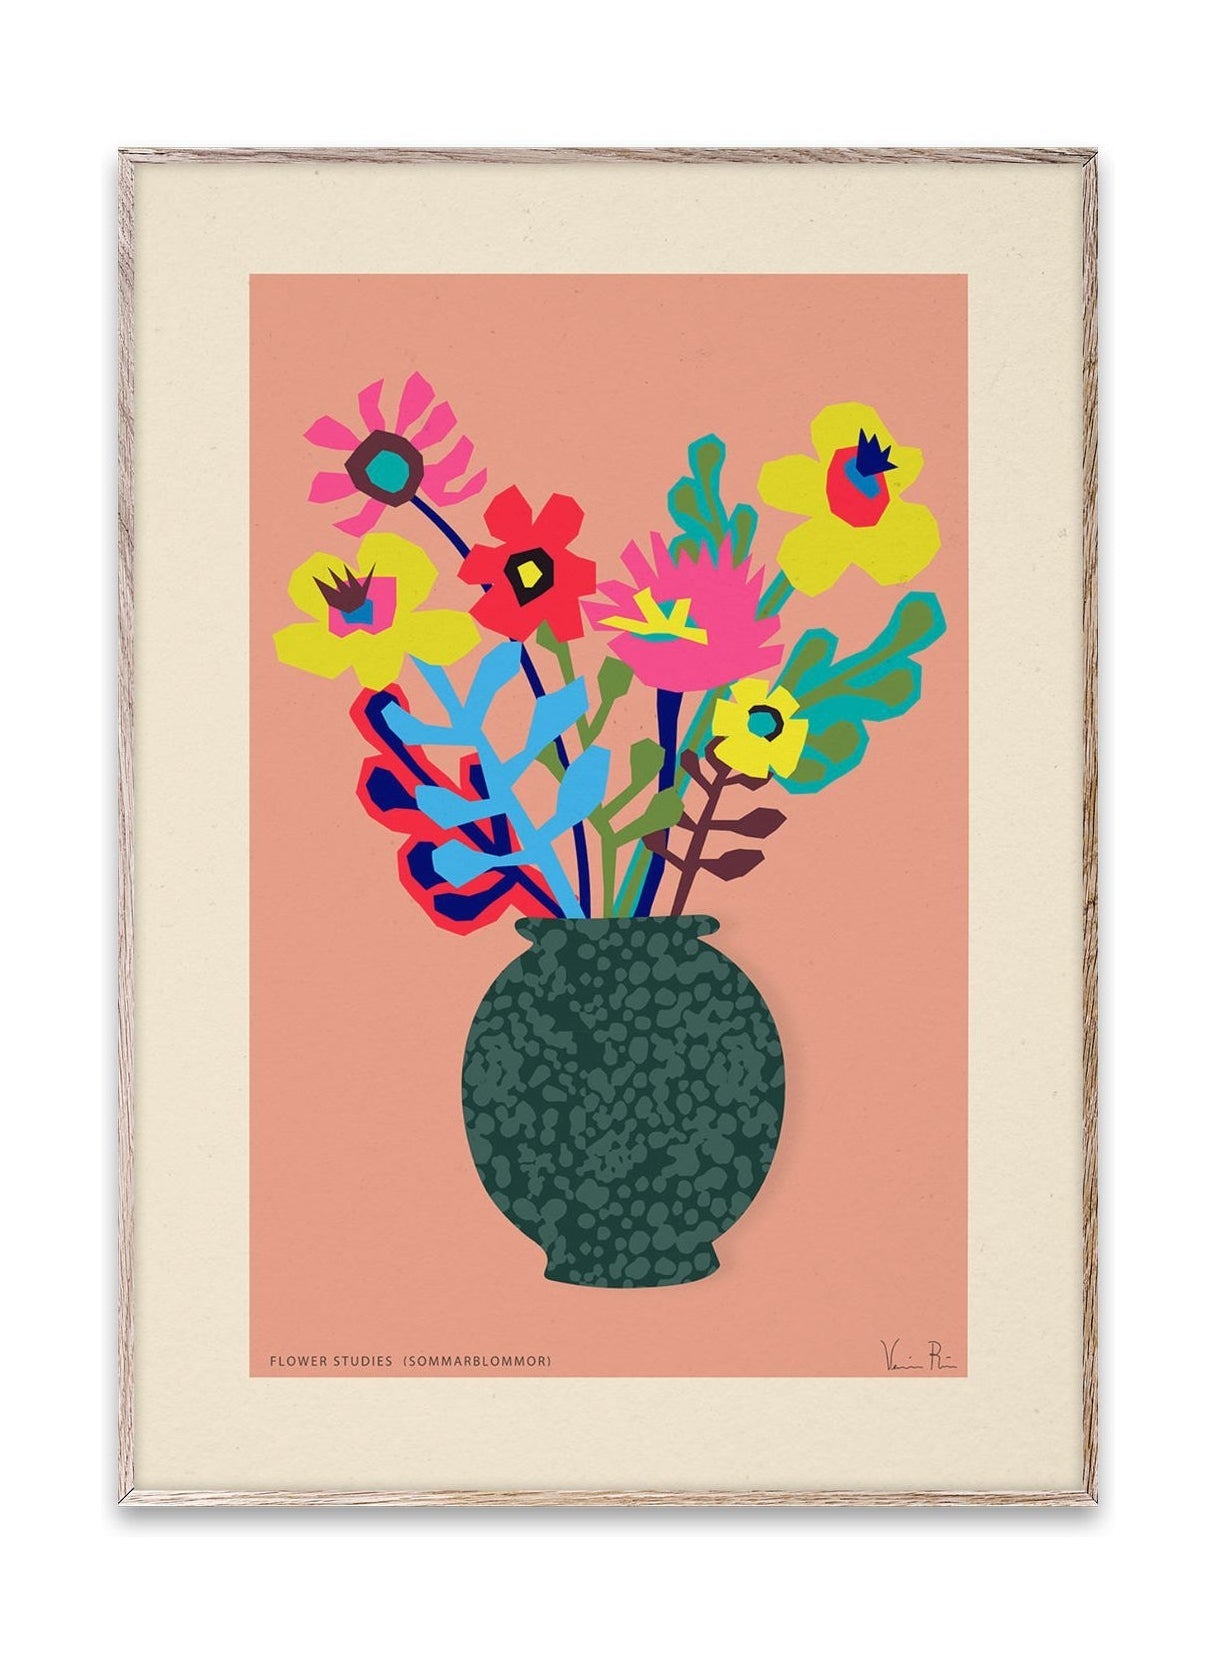 Paper Collective Flower Studies 02 (Sommarblommar) Cartel, 30x40 cm